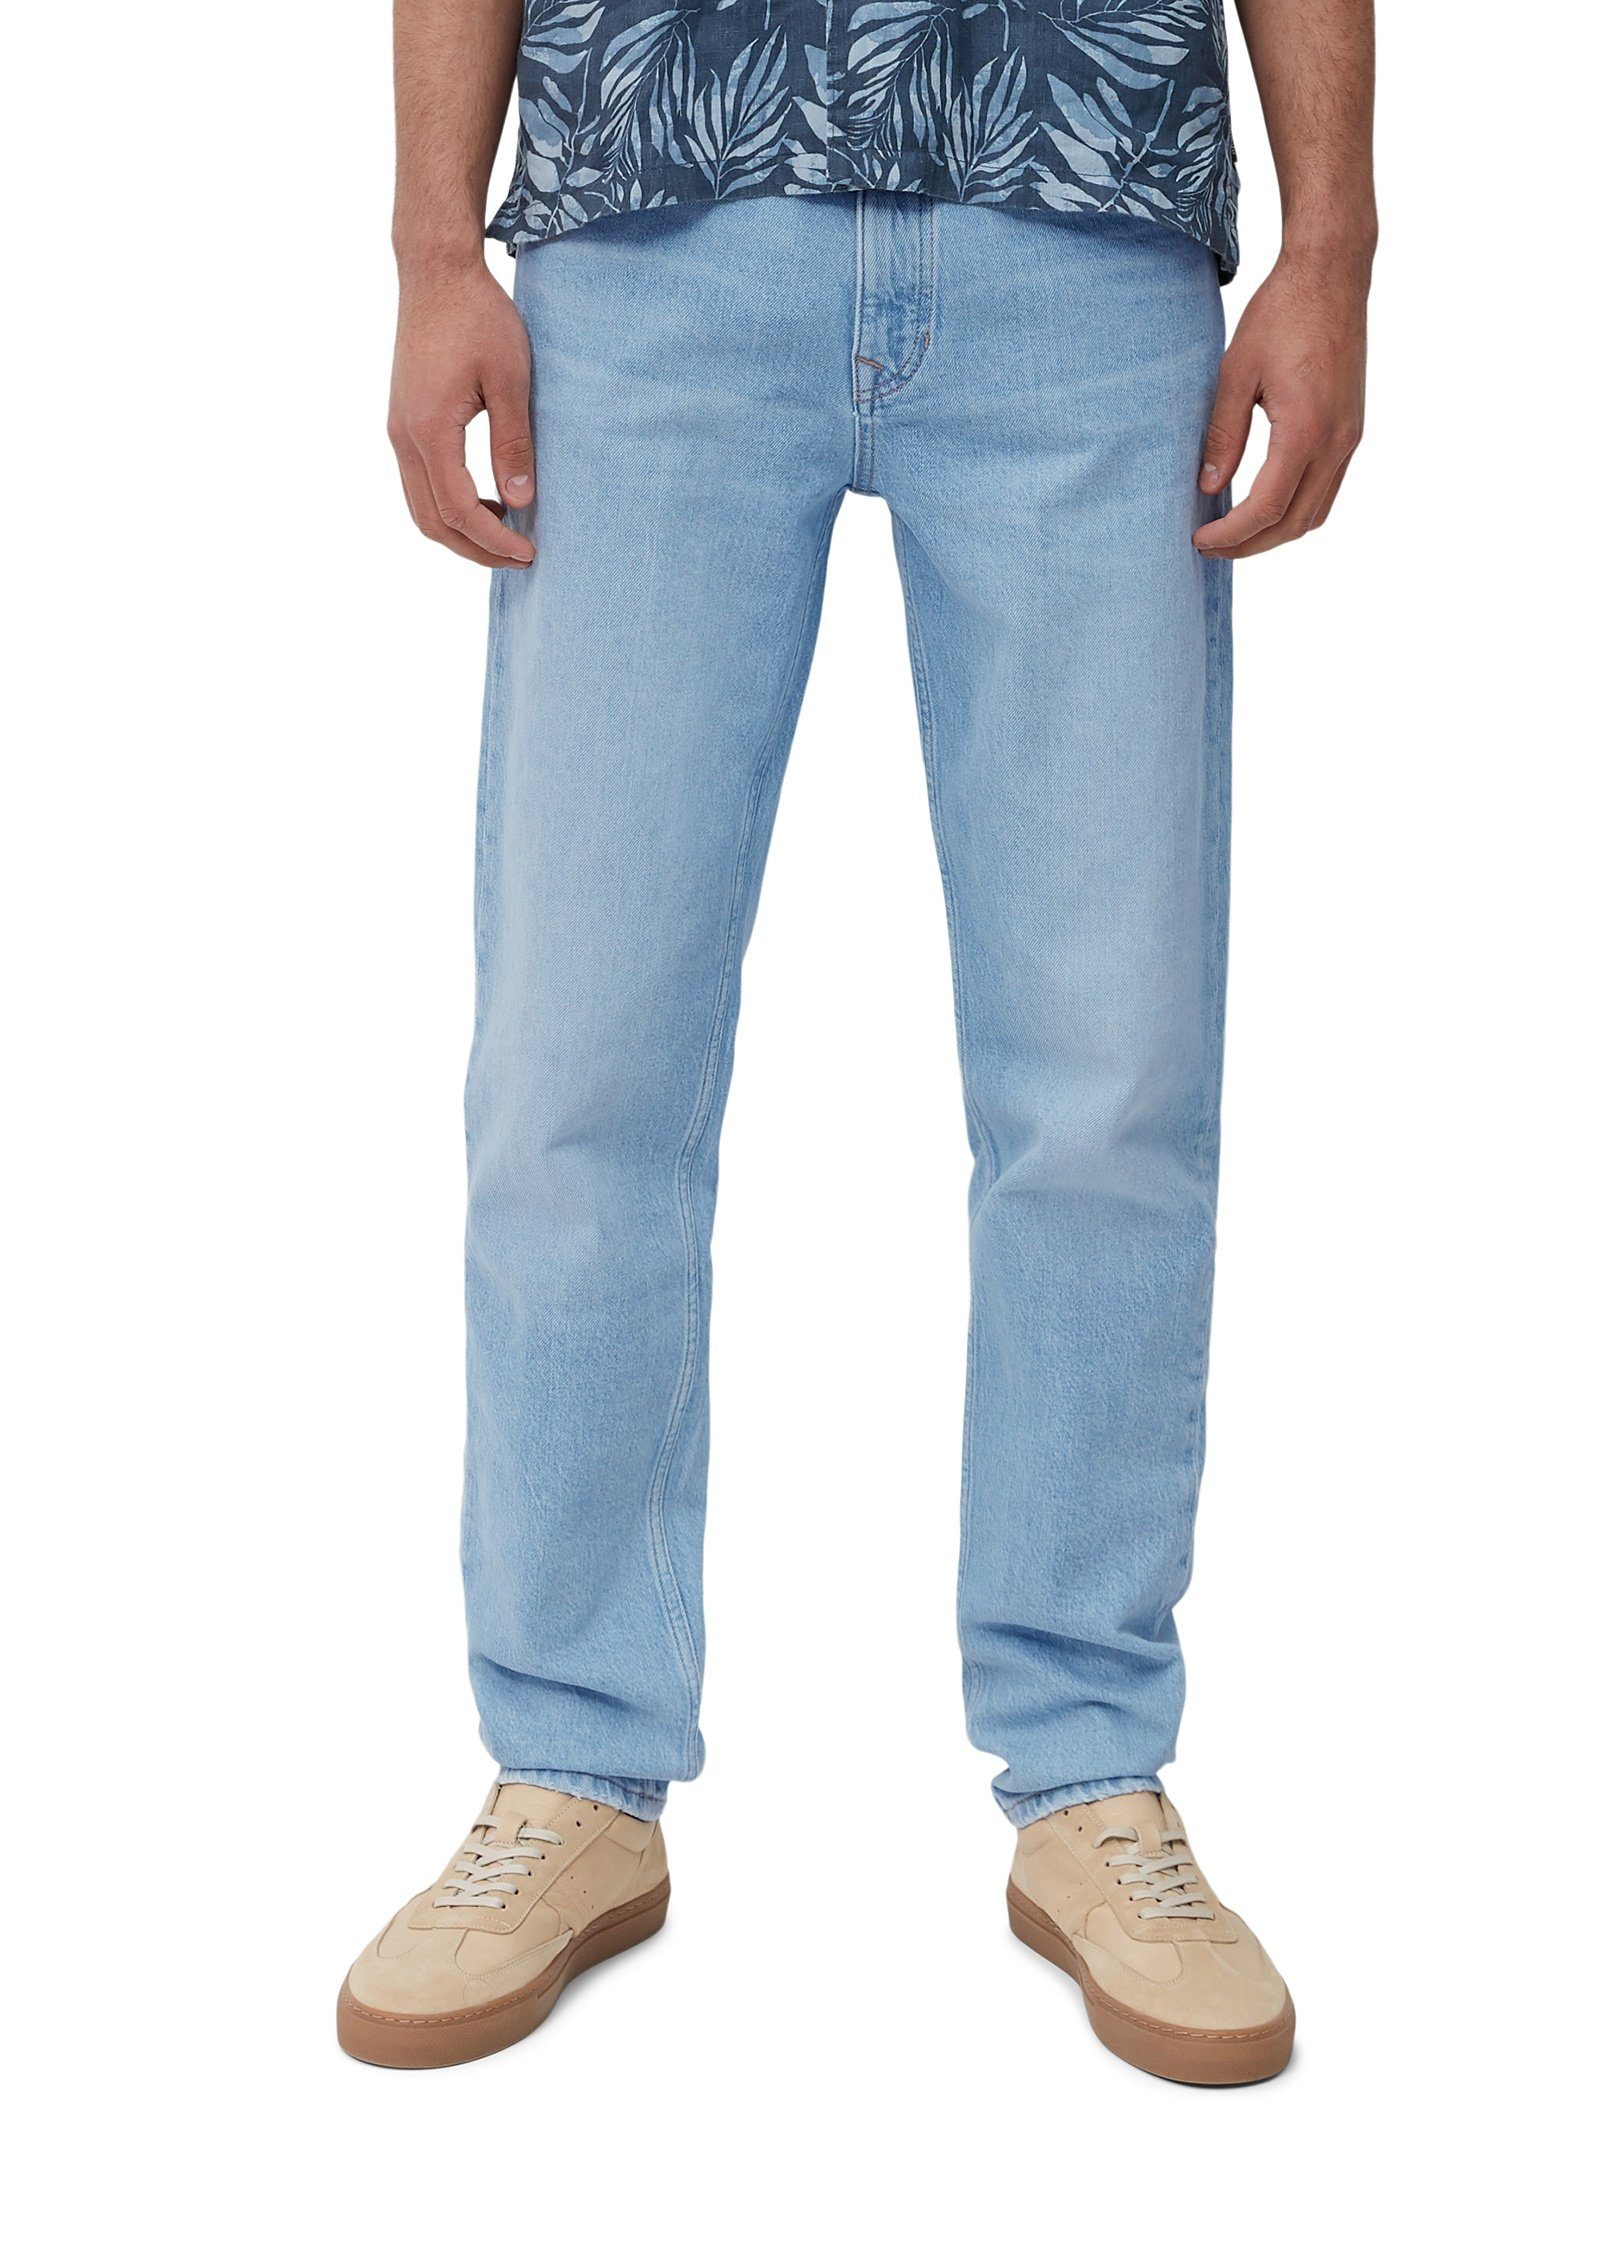 hochwertiger Tapered-fit-Jeans Bio-Baumwolle mit Marc O'Polo